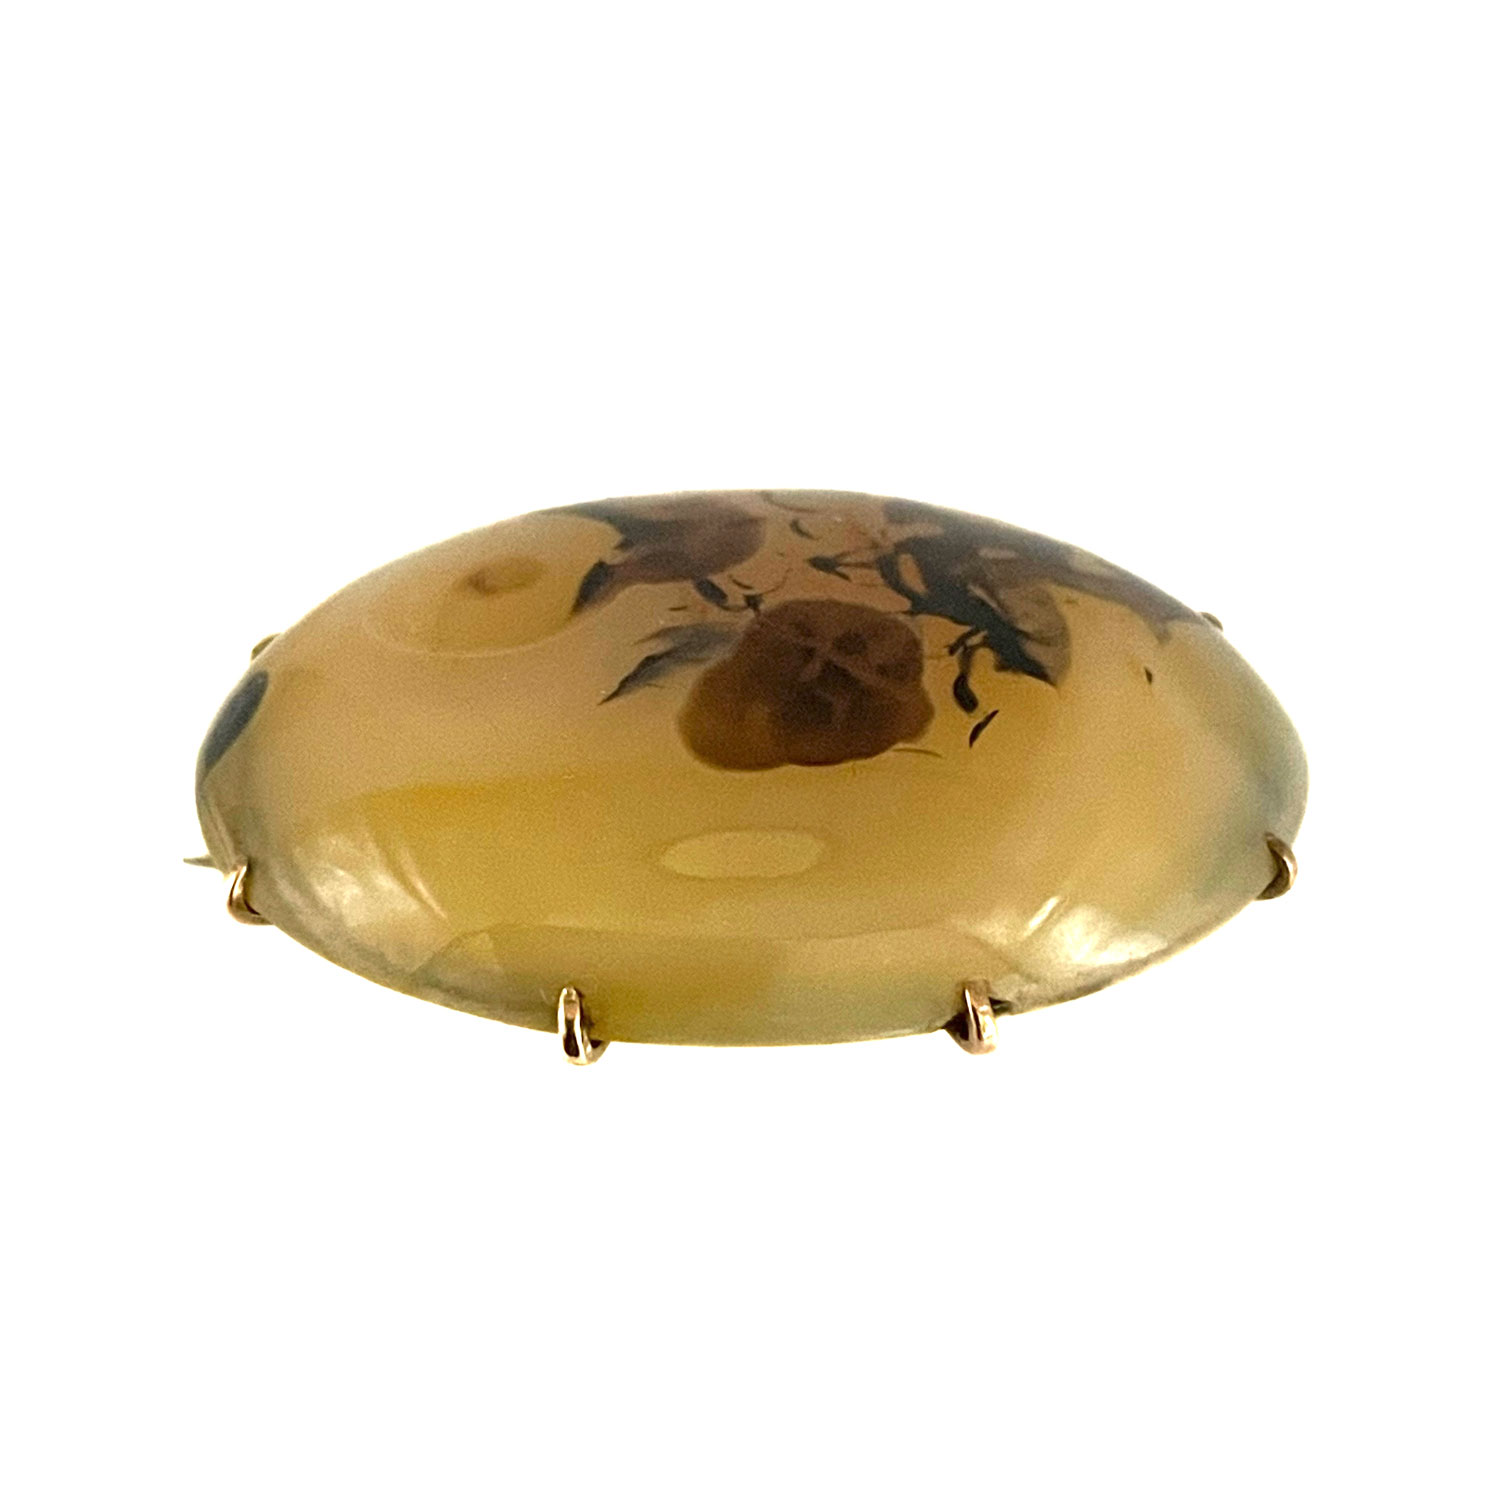 Dendrite agate brooch